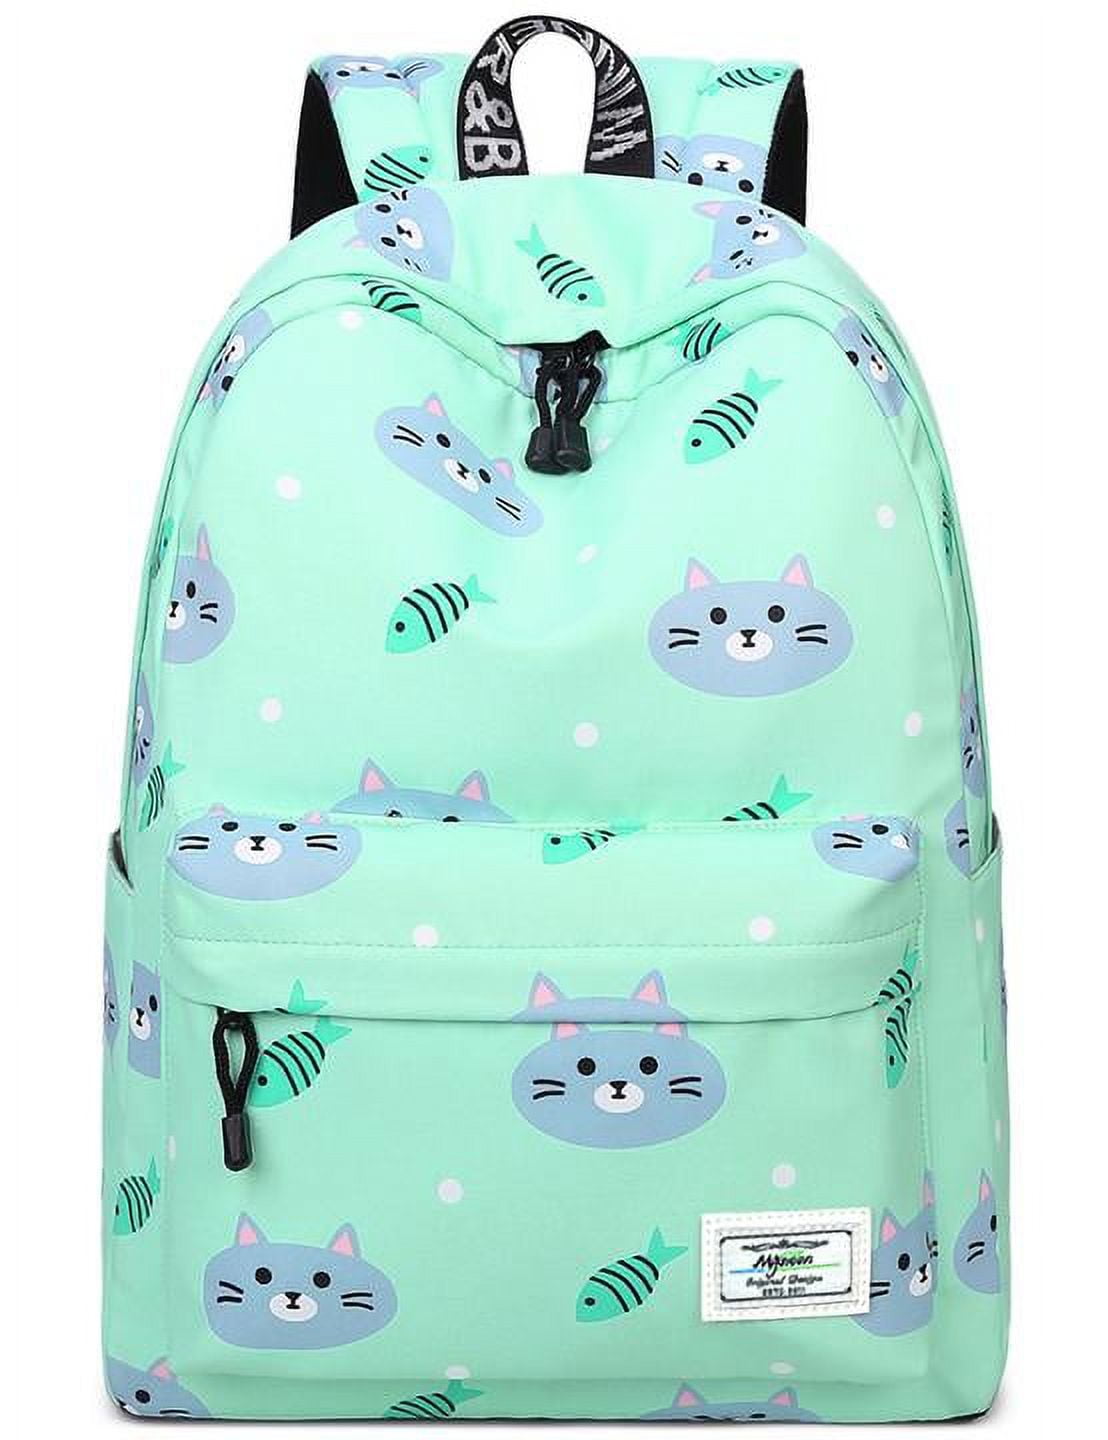 Mygreen Bookbags for Teens, Cute Cat and Fish Laptop Backpack